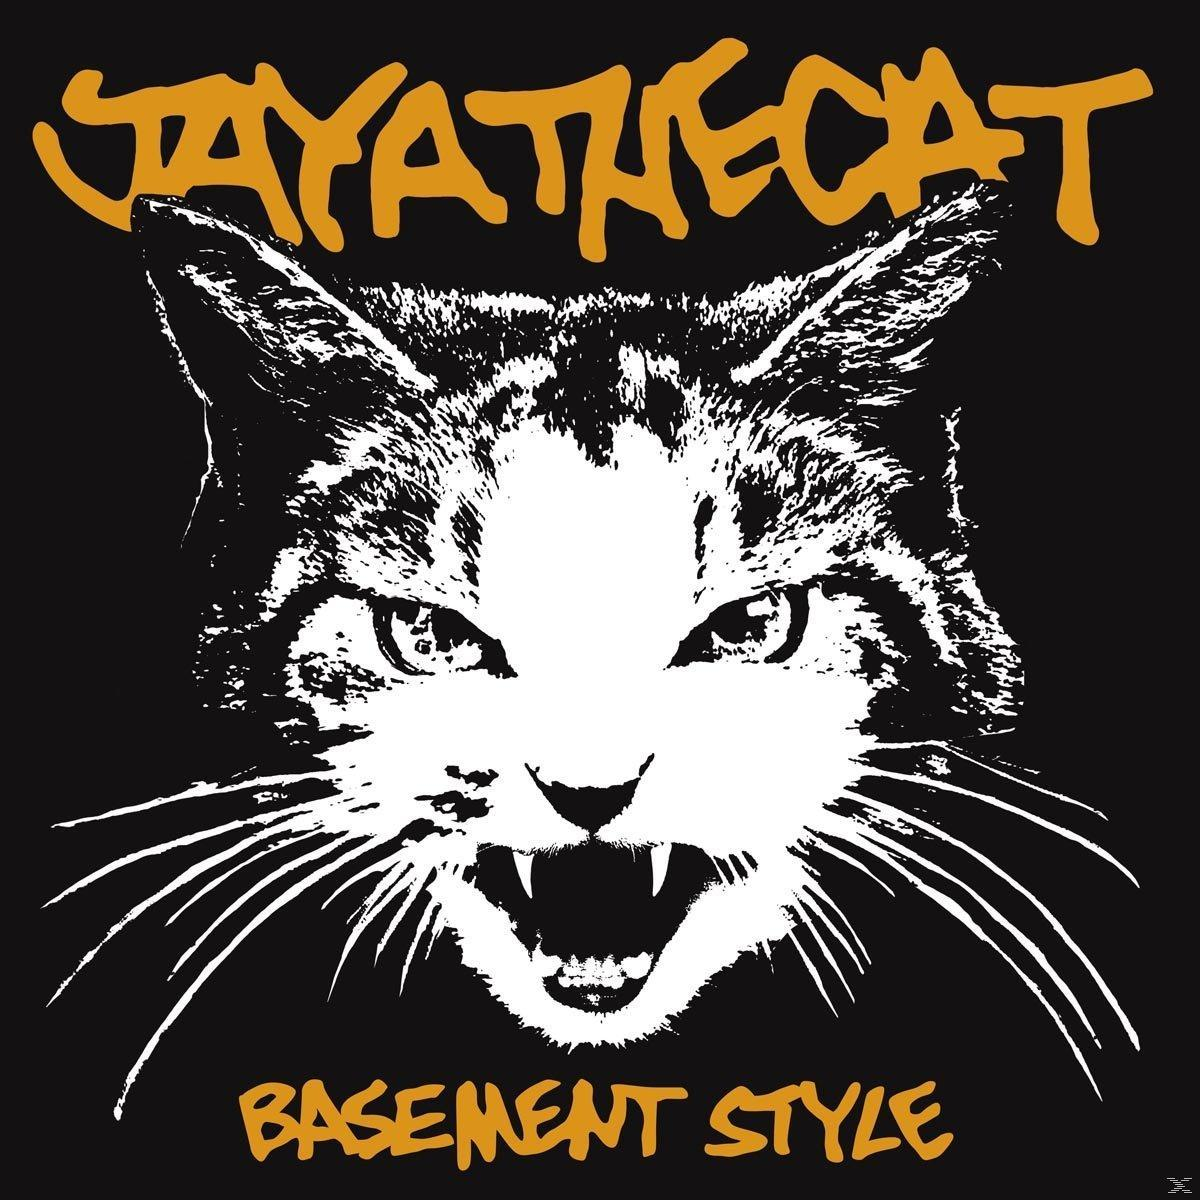 Cat Style - (Reissue) Basement - Jaya (Vinyl) The